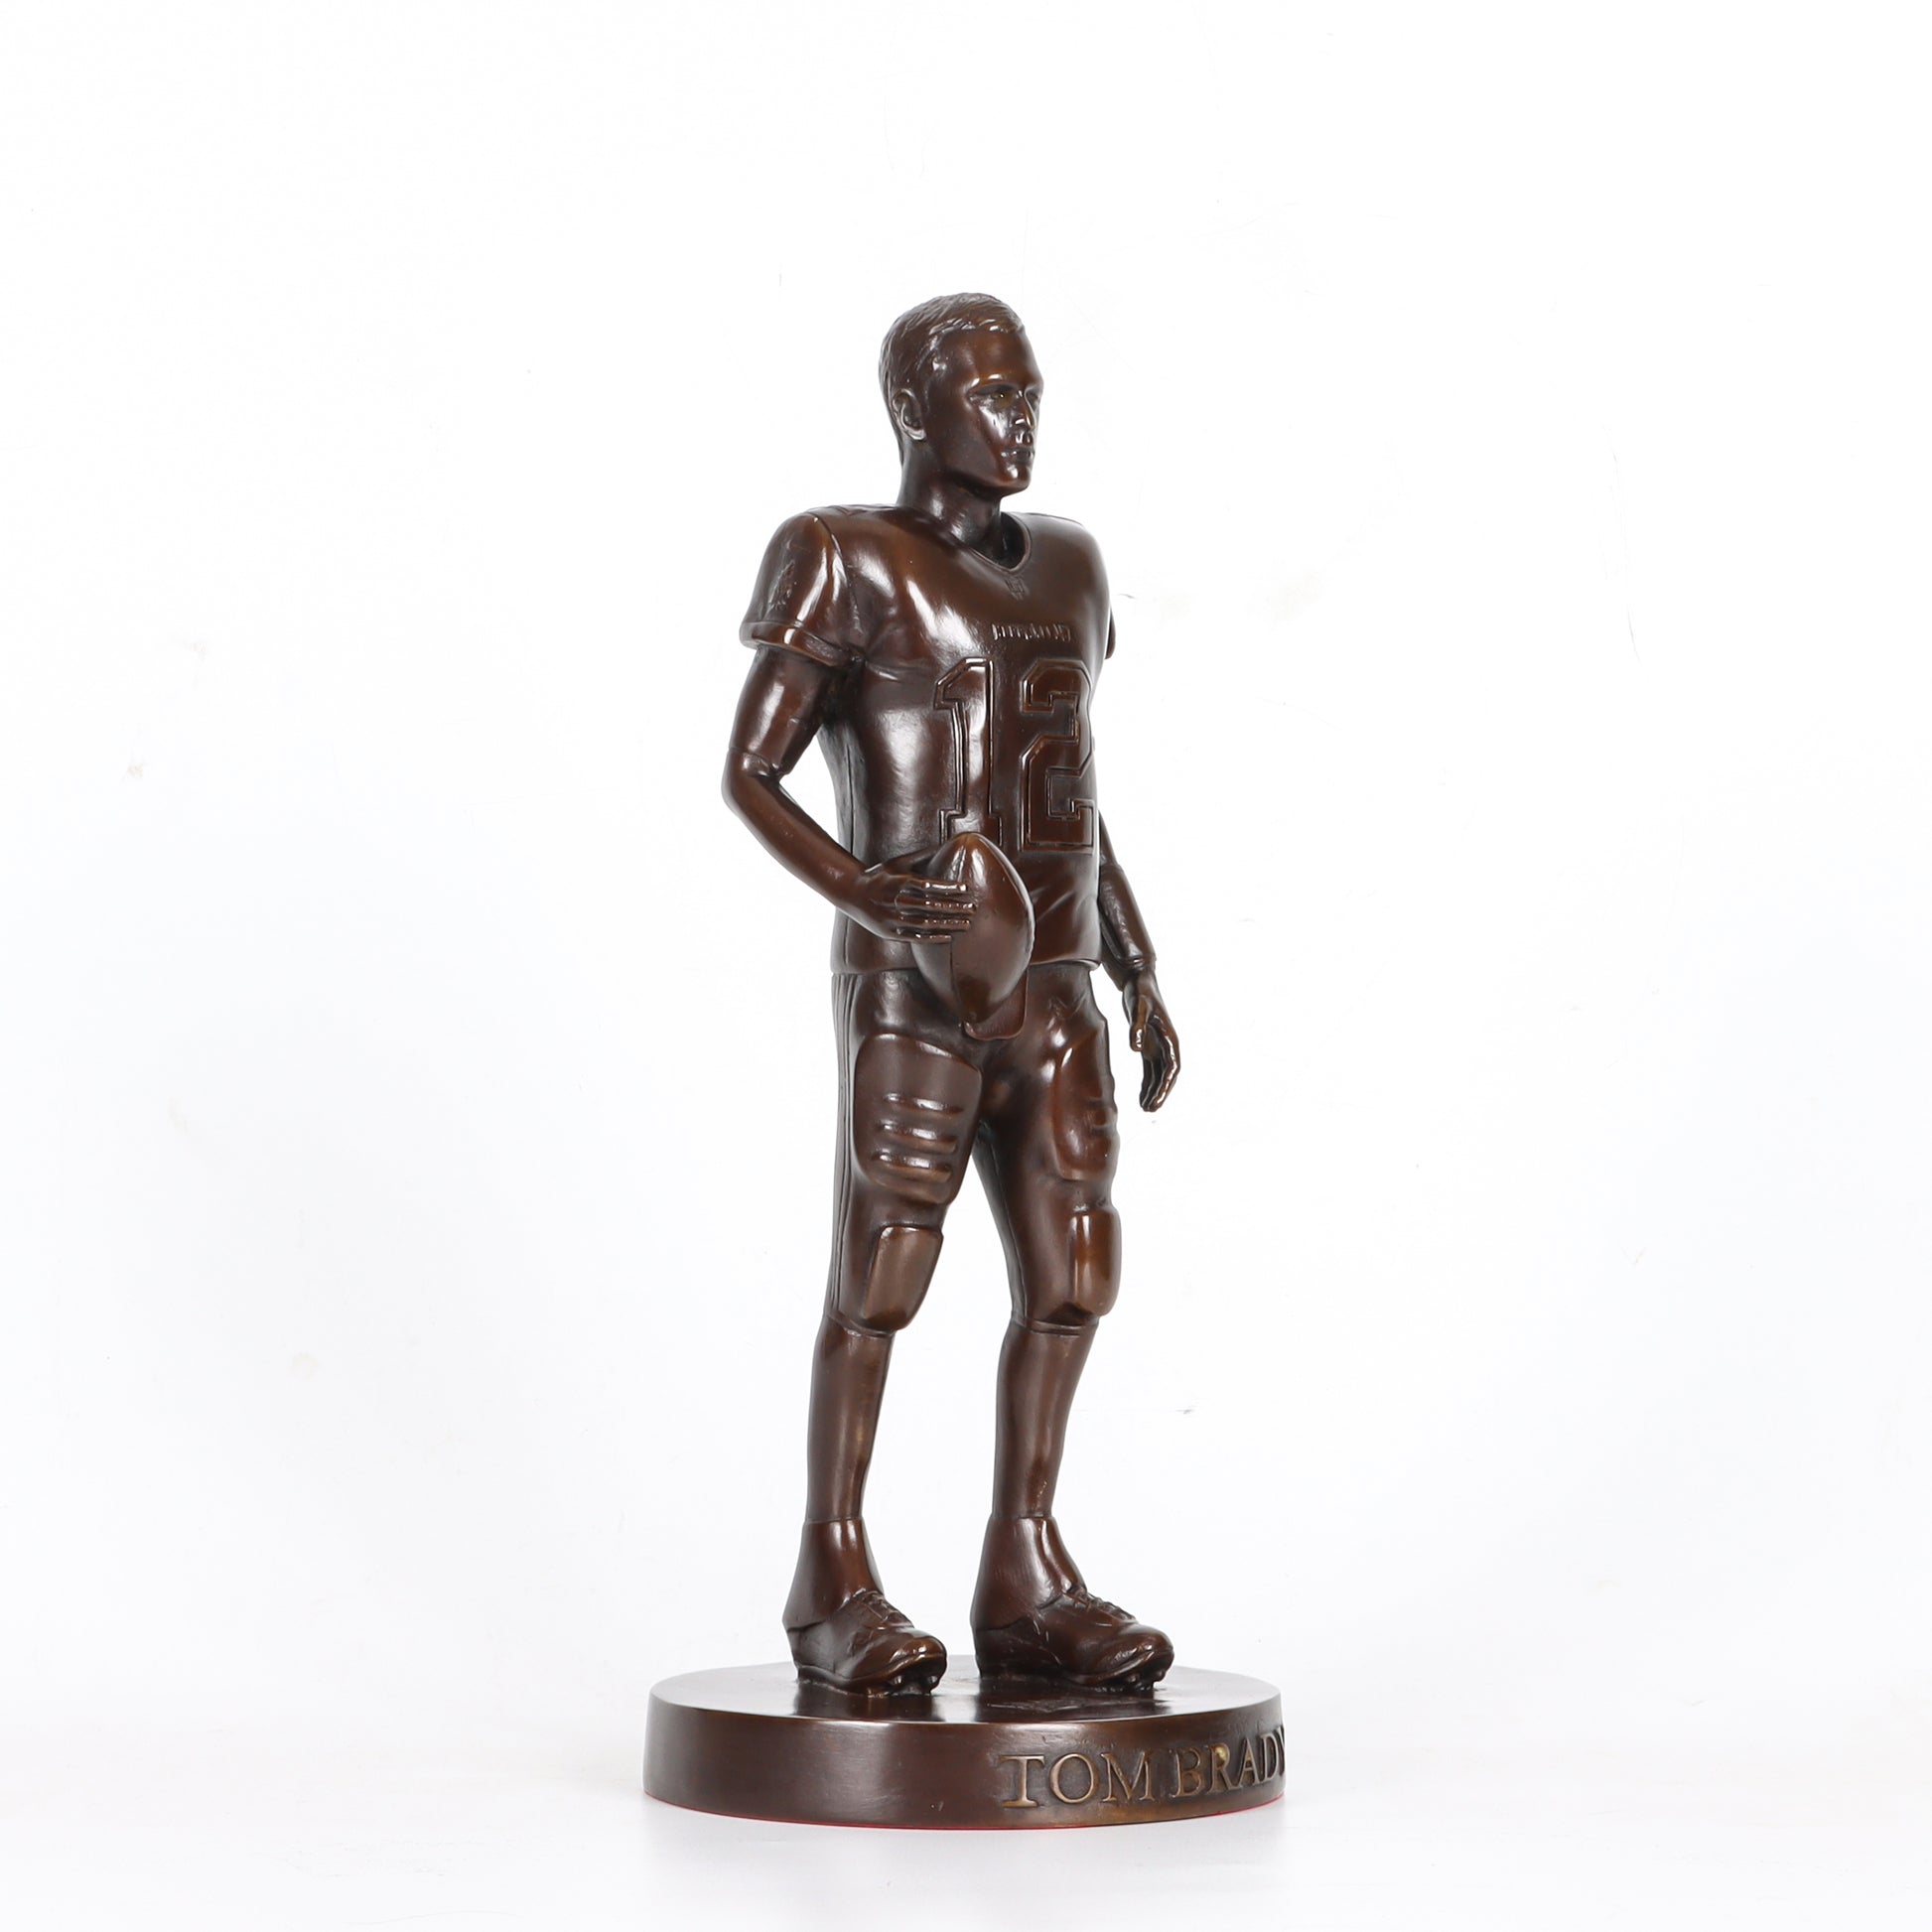 Tom Brady Statue Figurine 8